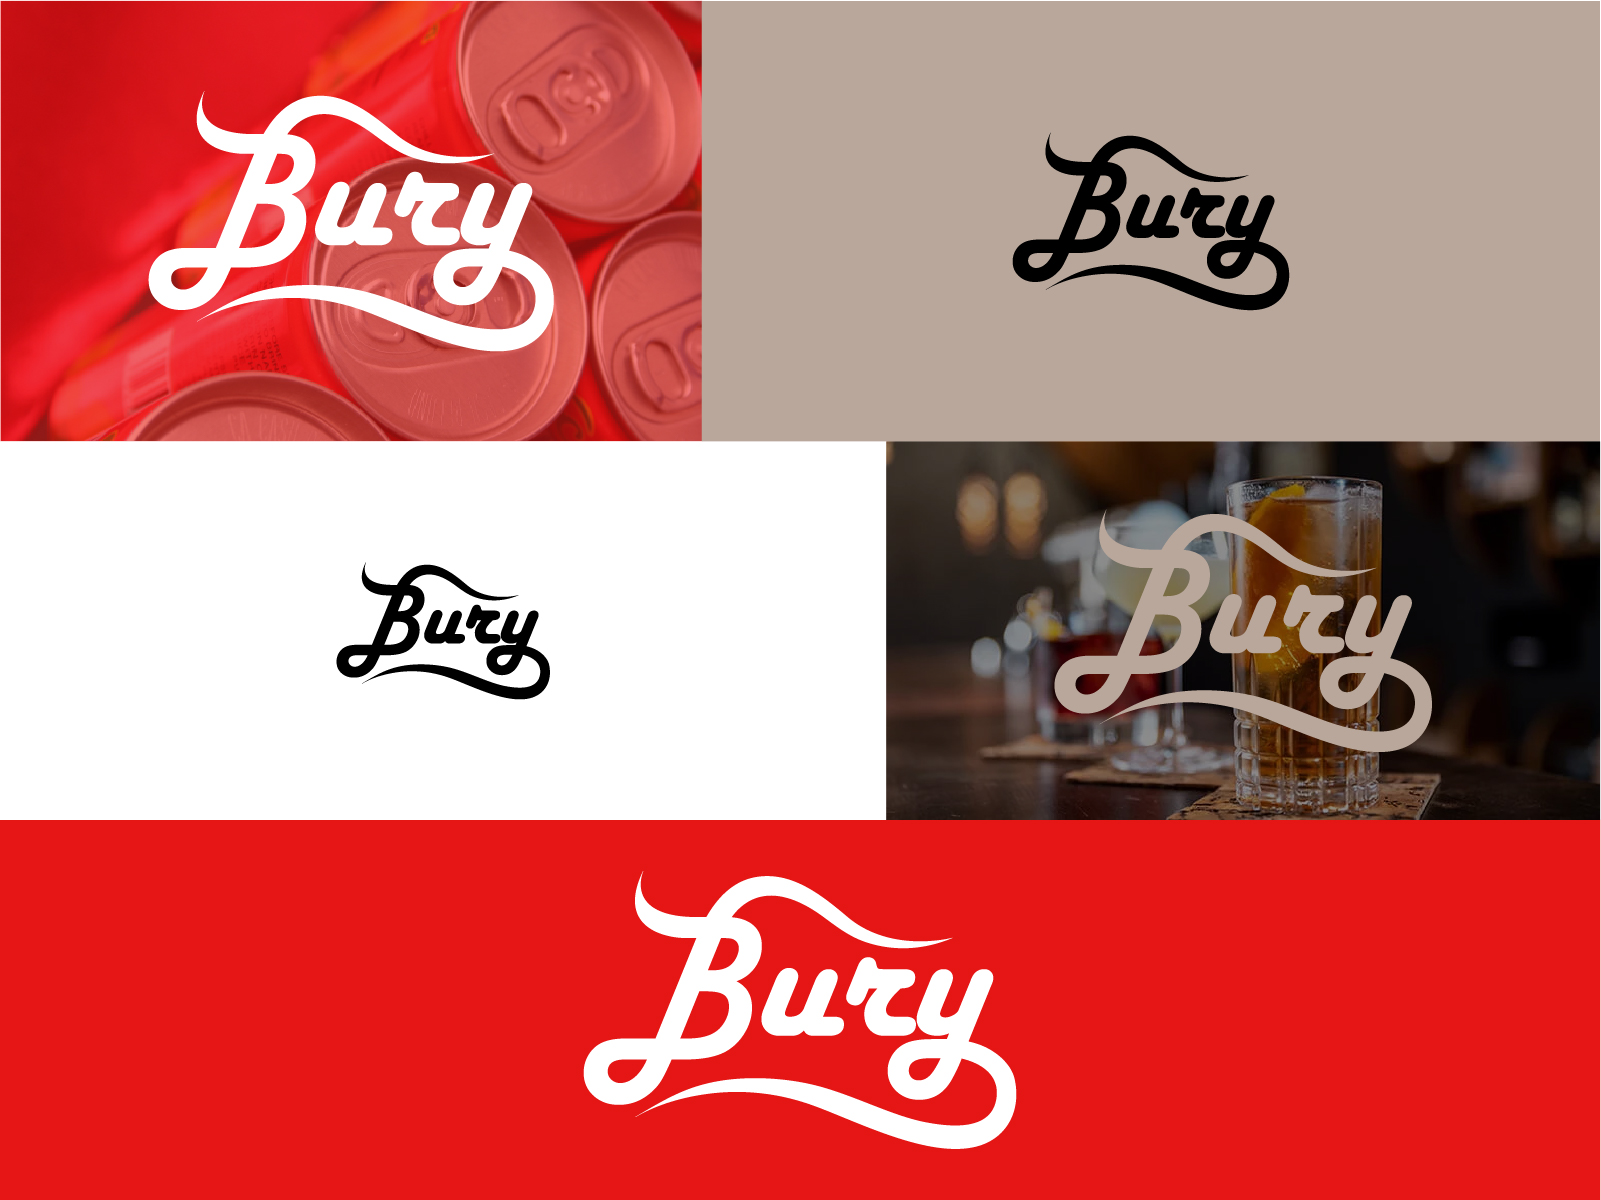 beverage brands logos